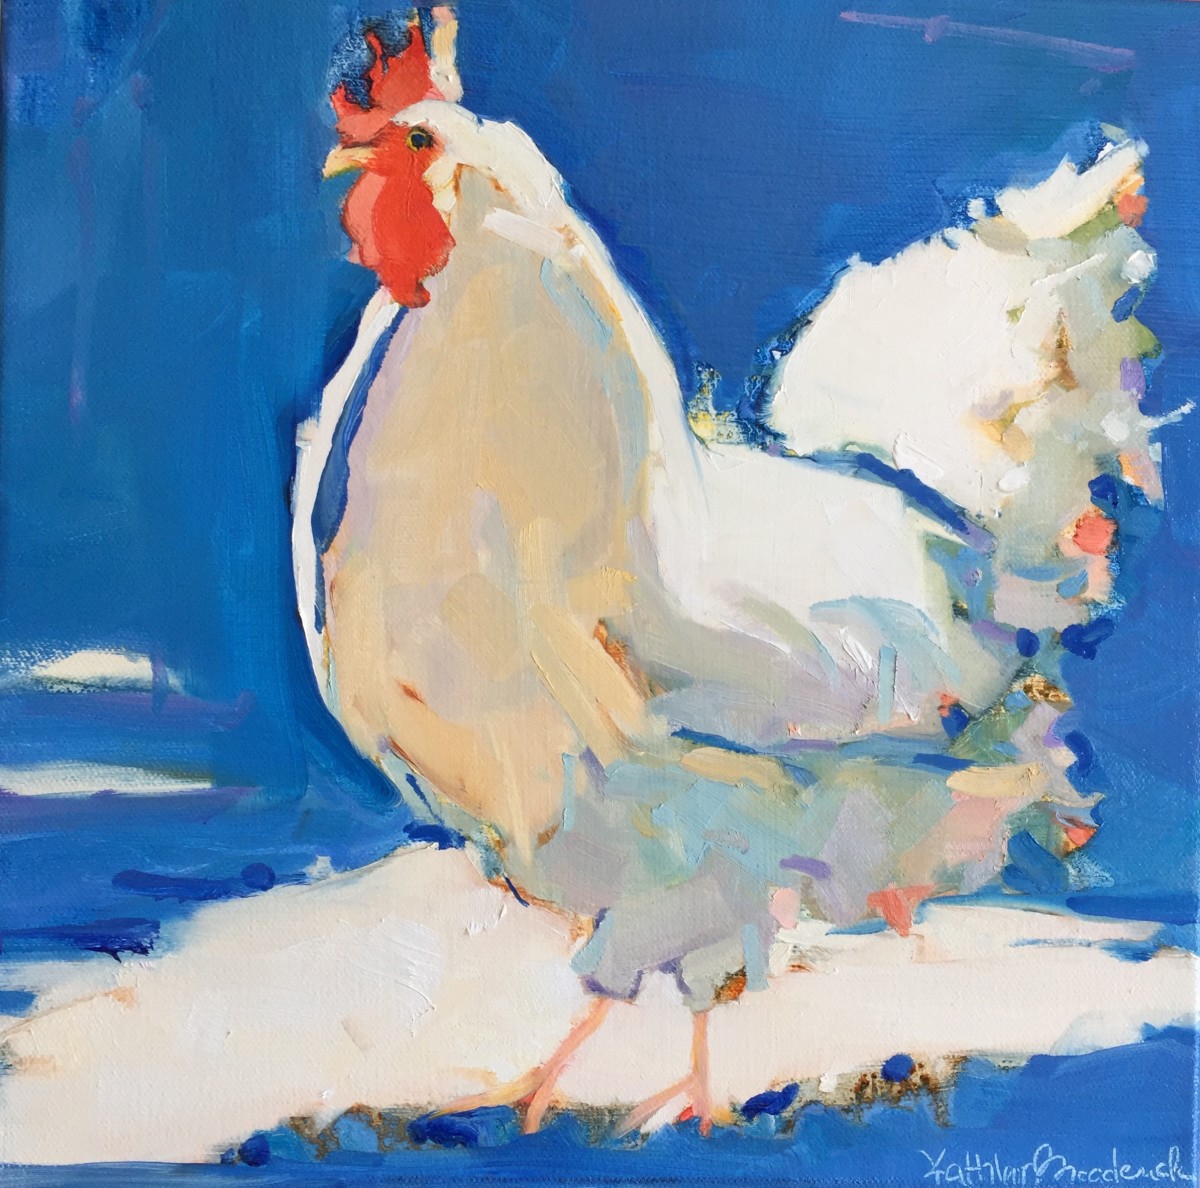 Blue Hen by kathleen broaderick 